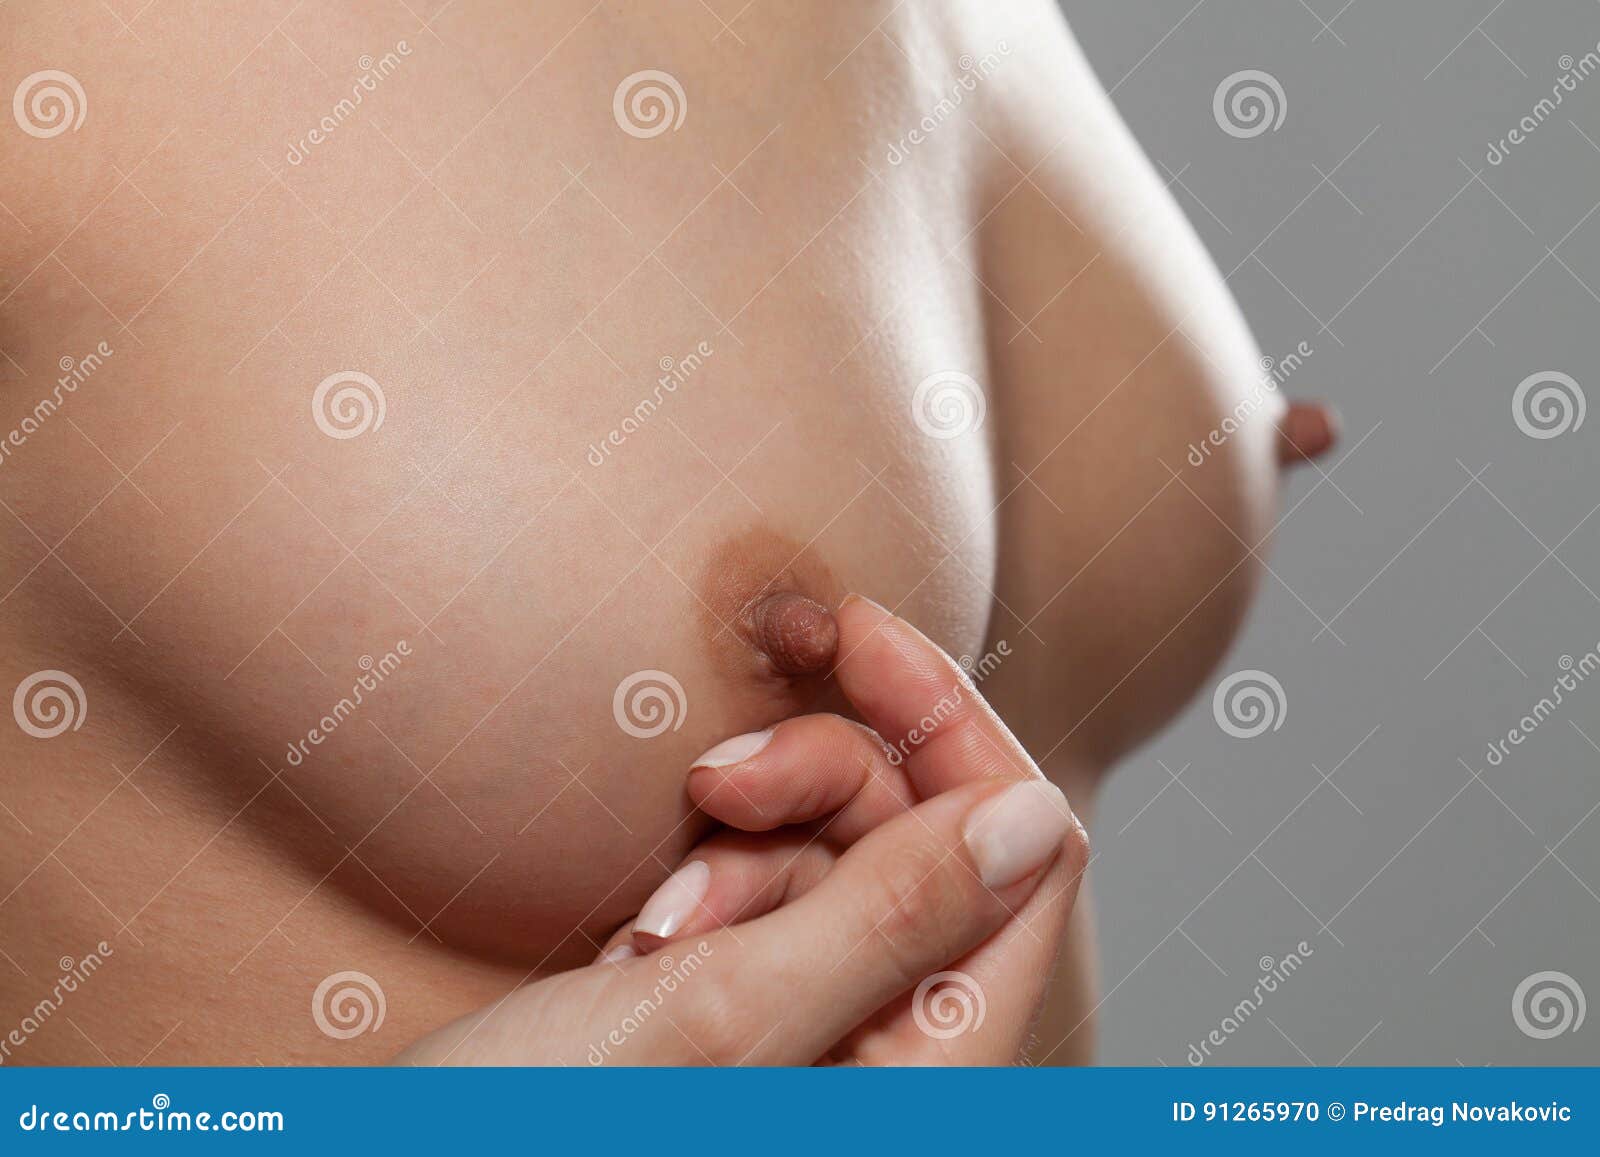 doug prindle add photo woman with big nipples